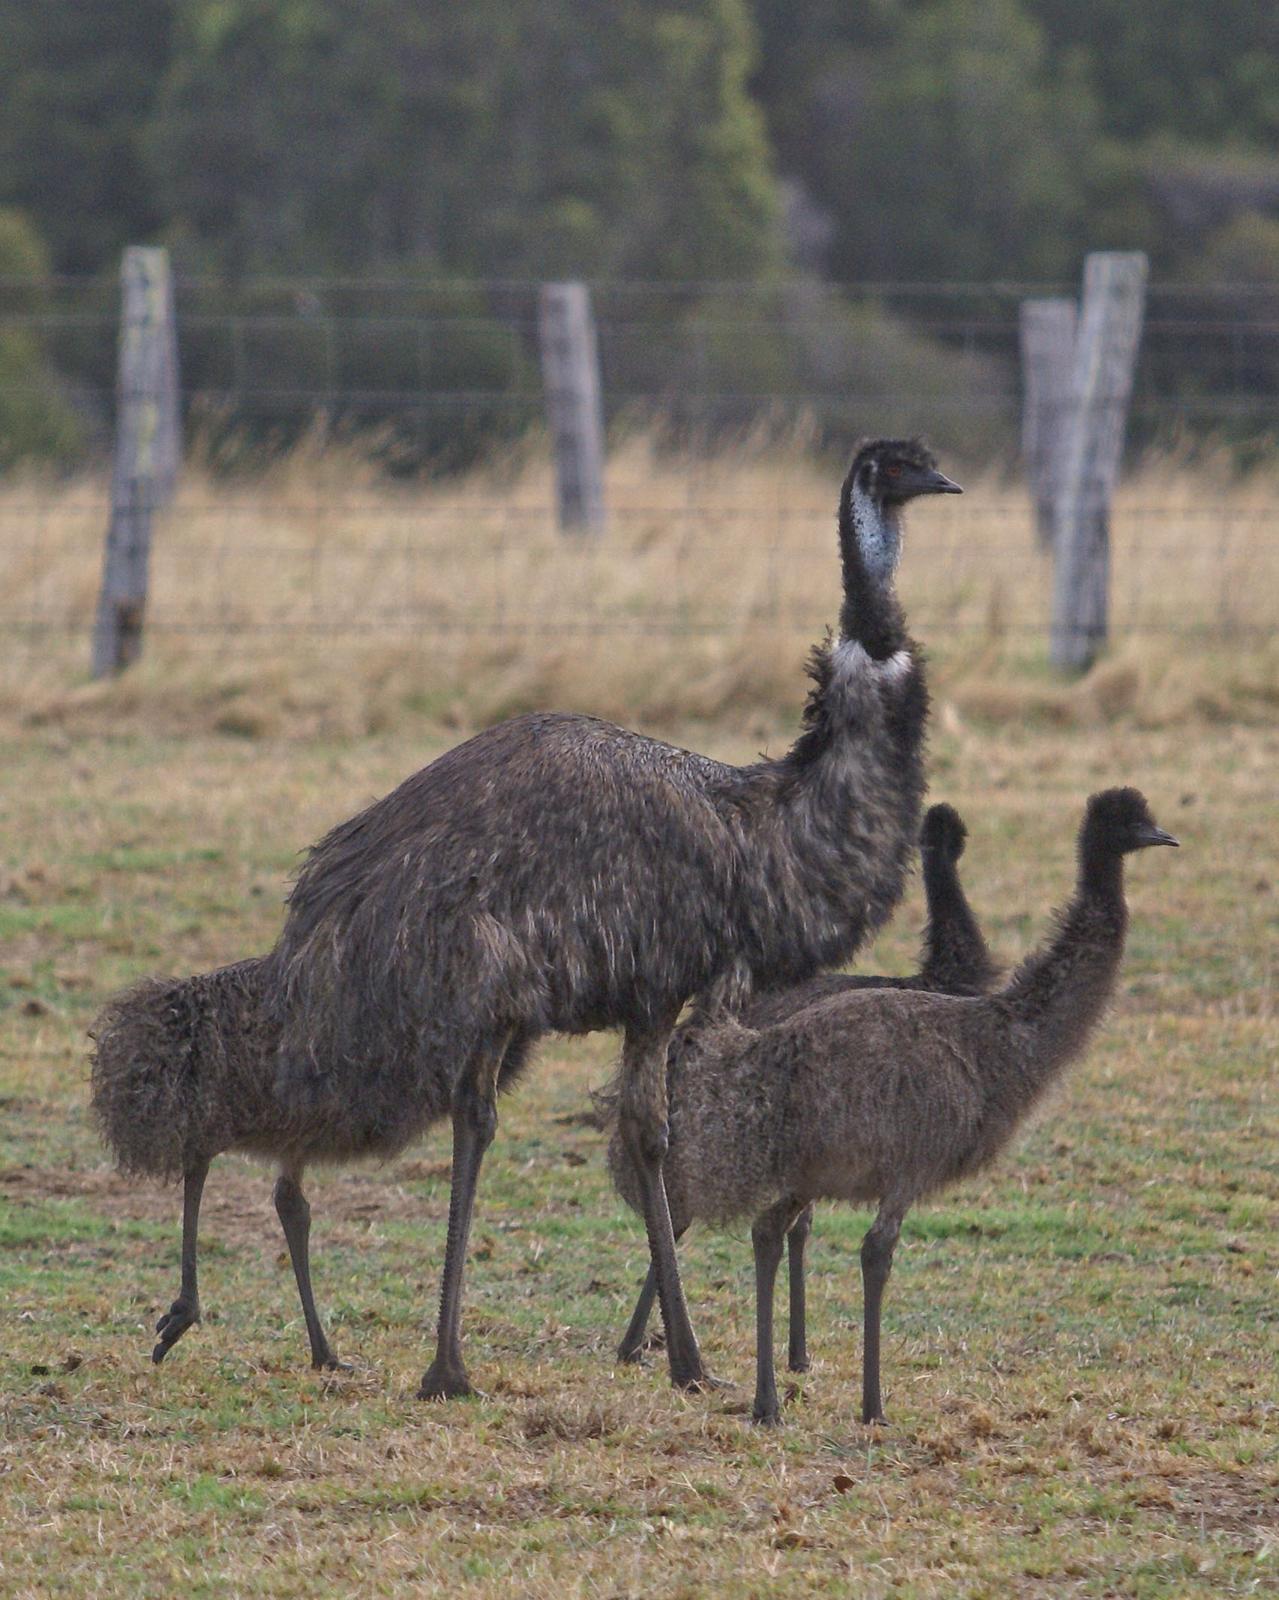 Emu Photo by Steve Percival